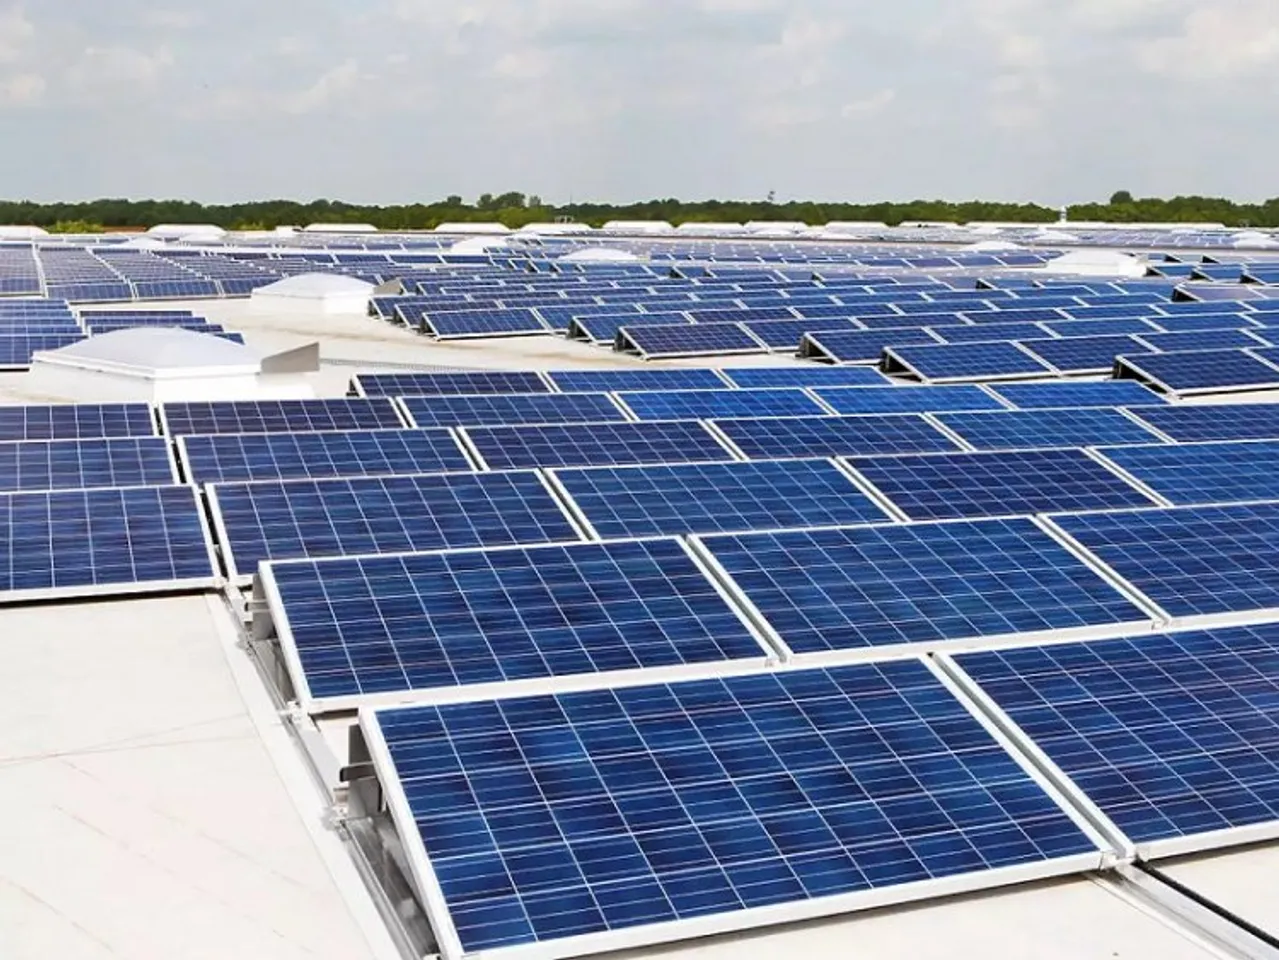 Tata Power to develop 4 MWp solar project at Tata Motors' Pune plant